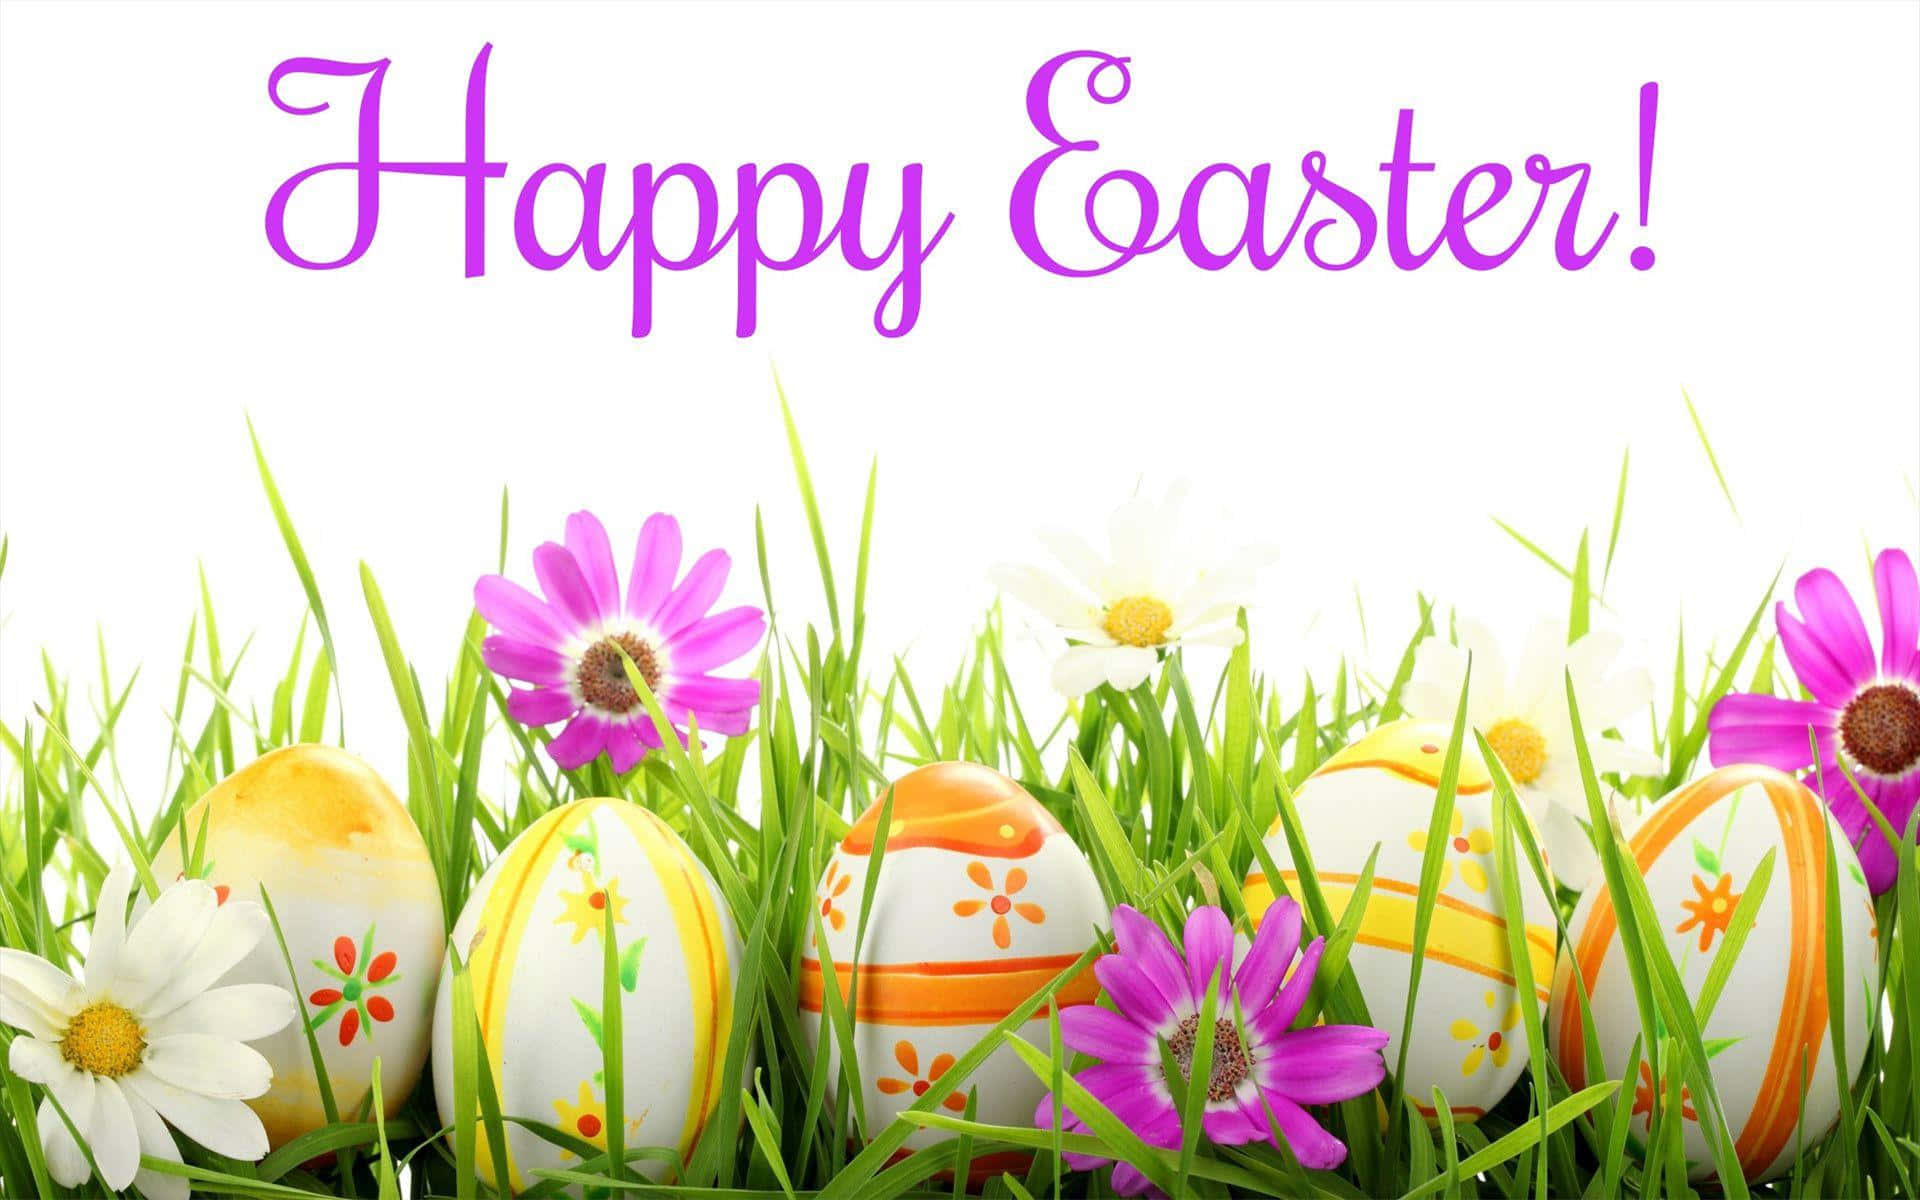 Wishing you a "Cute Happy Easter" full of joy, fun and chocolate! Wallpaper